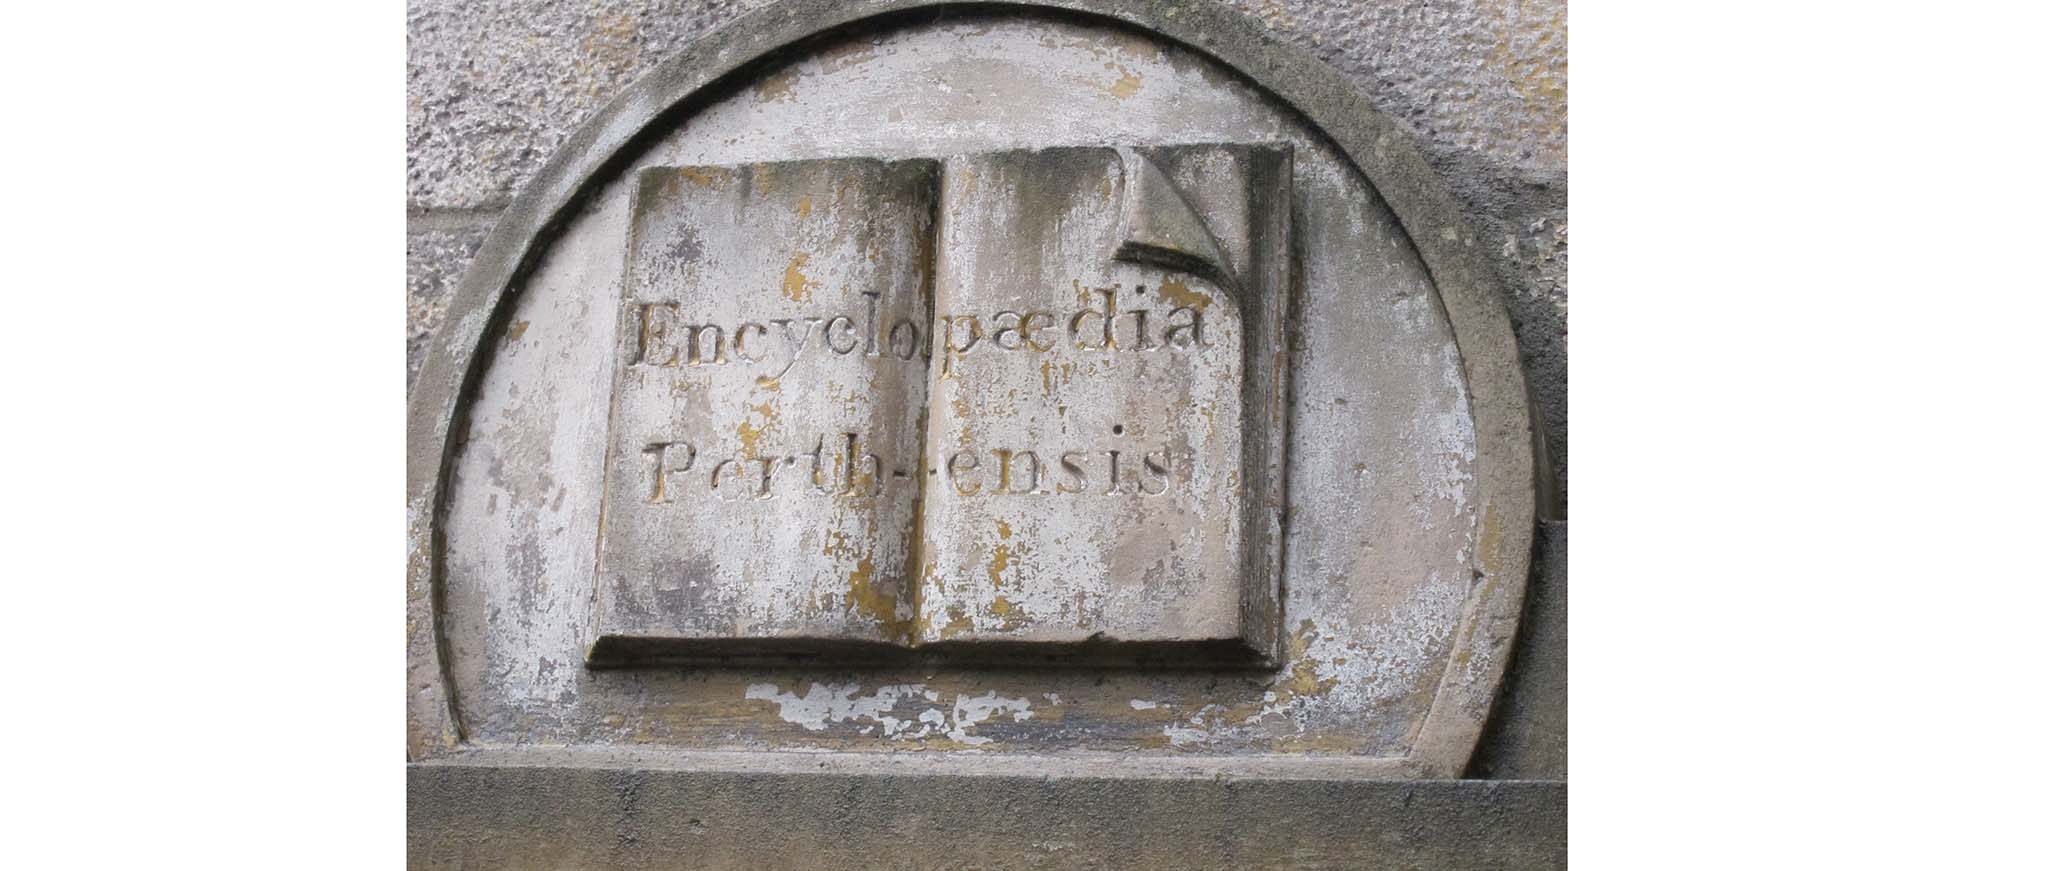 Encyclopædia Perthensis